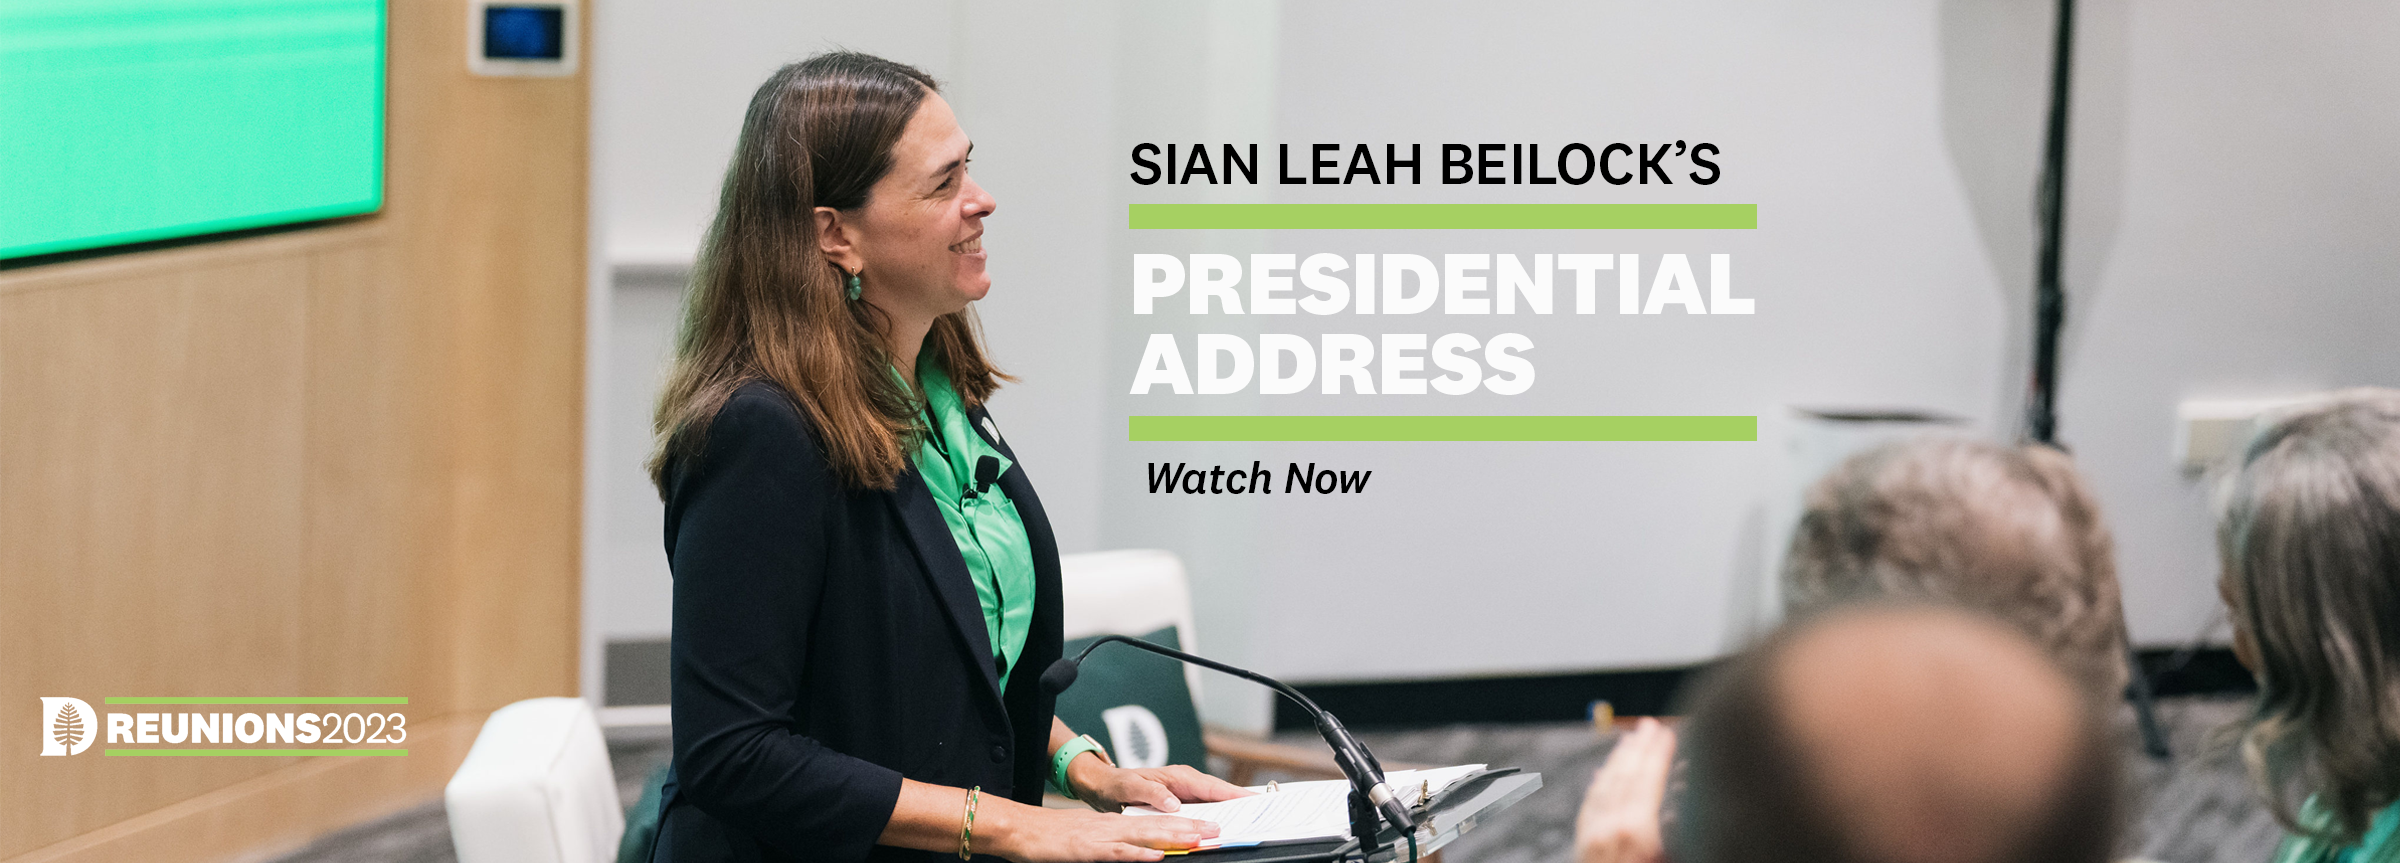 Sian Leah Beilock's Presidential Address Watch Now